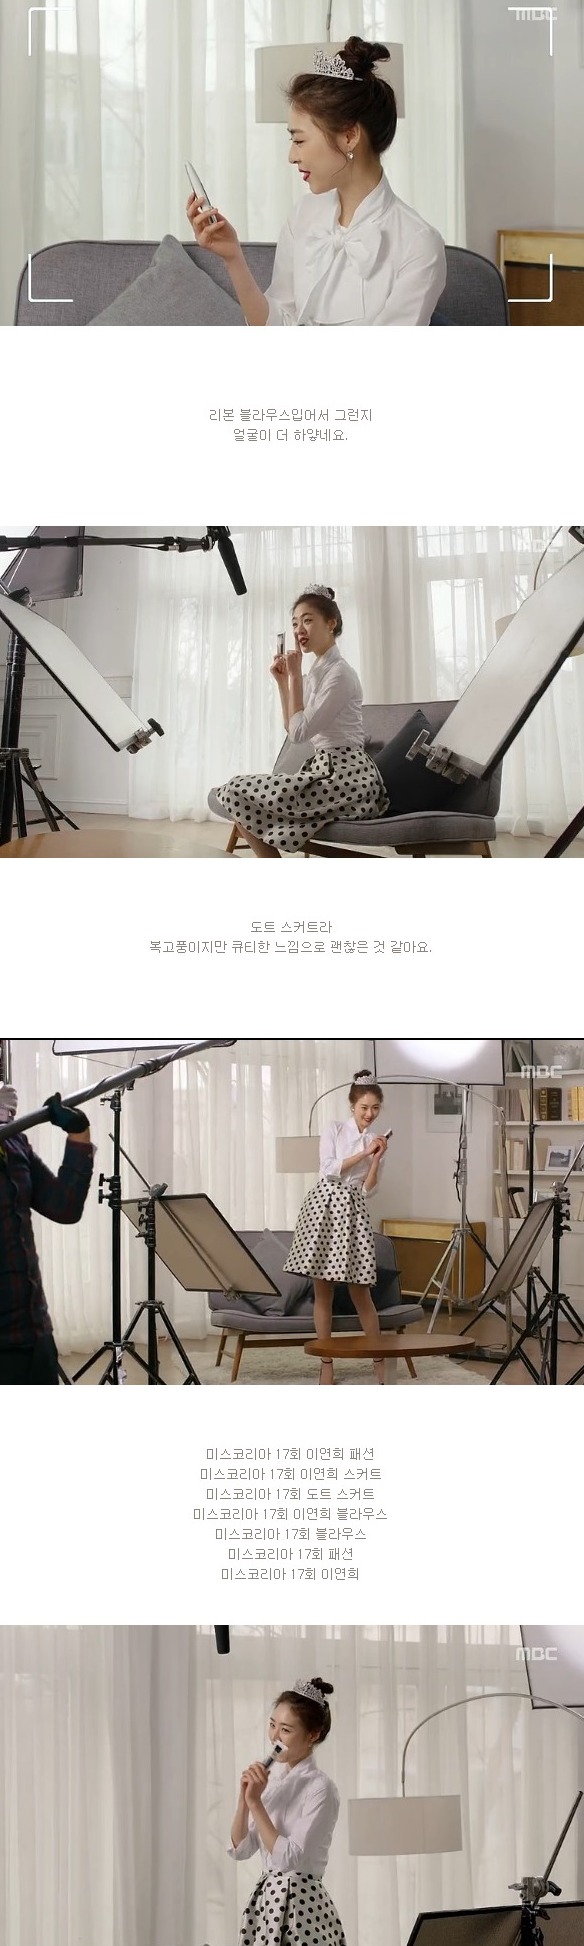 episode 17 captures for the Korean drama 'Miss Korea'